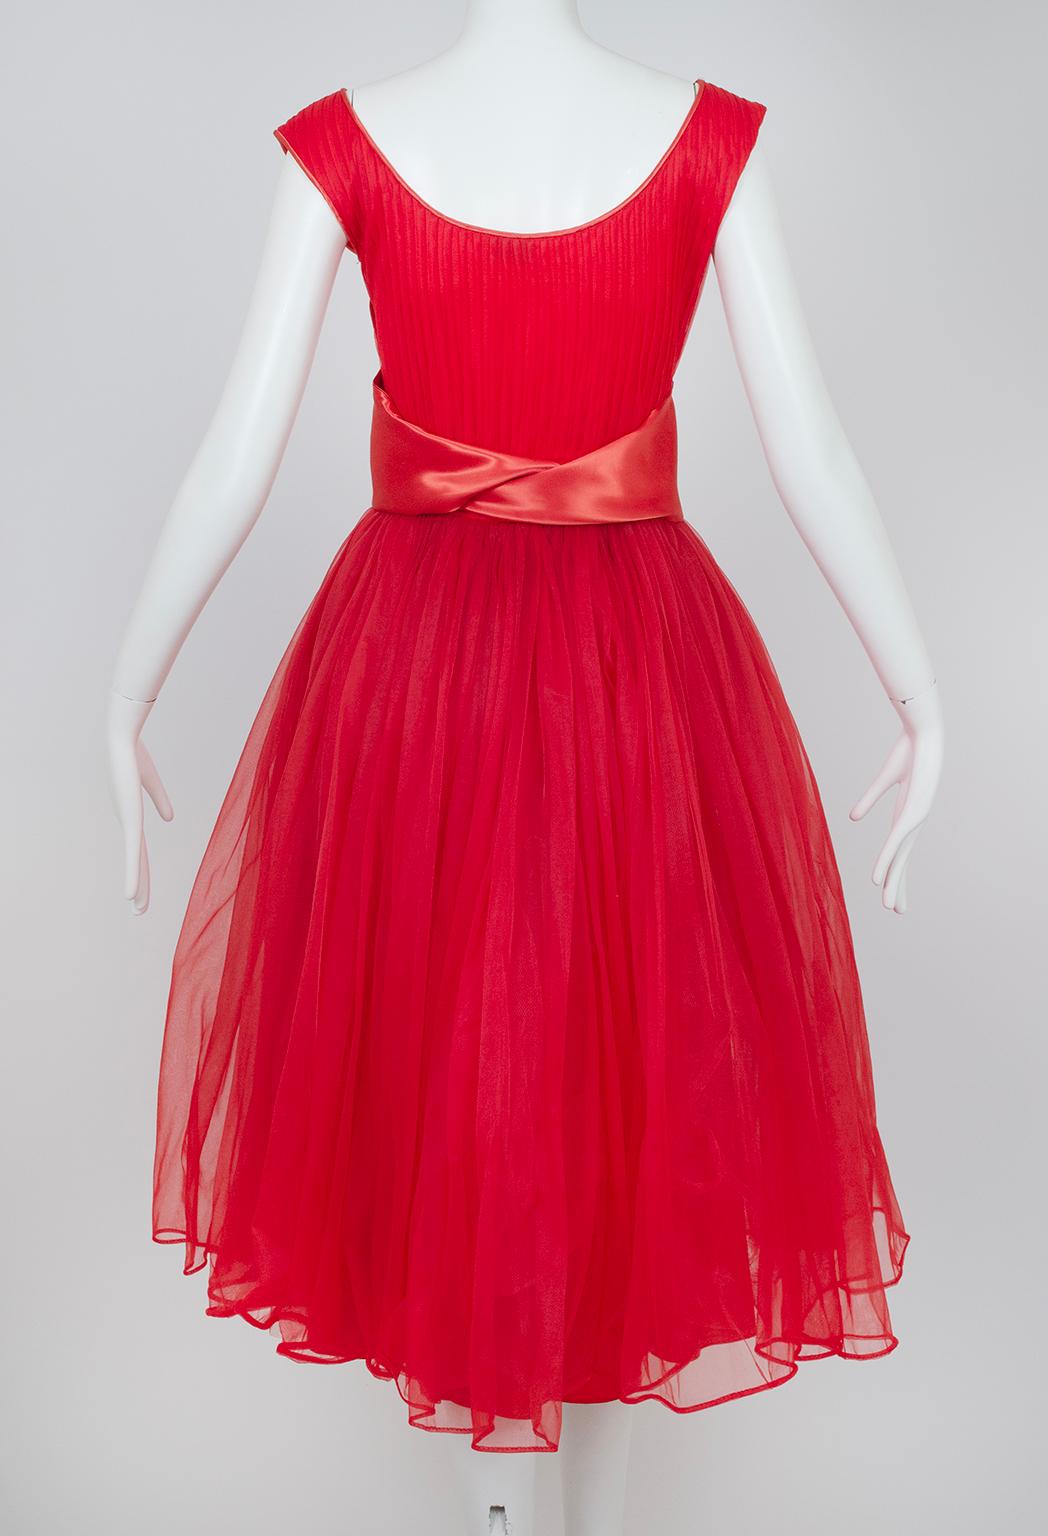 Emma Domb Red Bib Front Ballerina Party Dress with Satin Cummerbund – S, 1950s For Sale 1